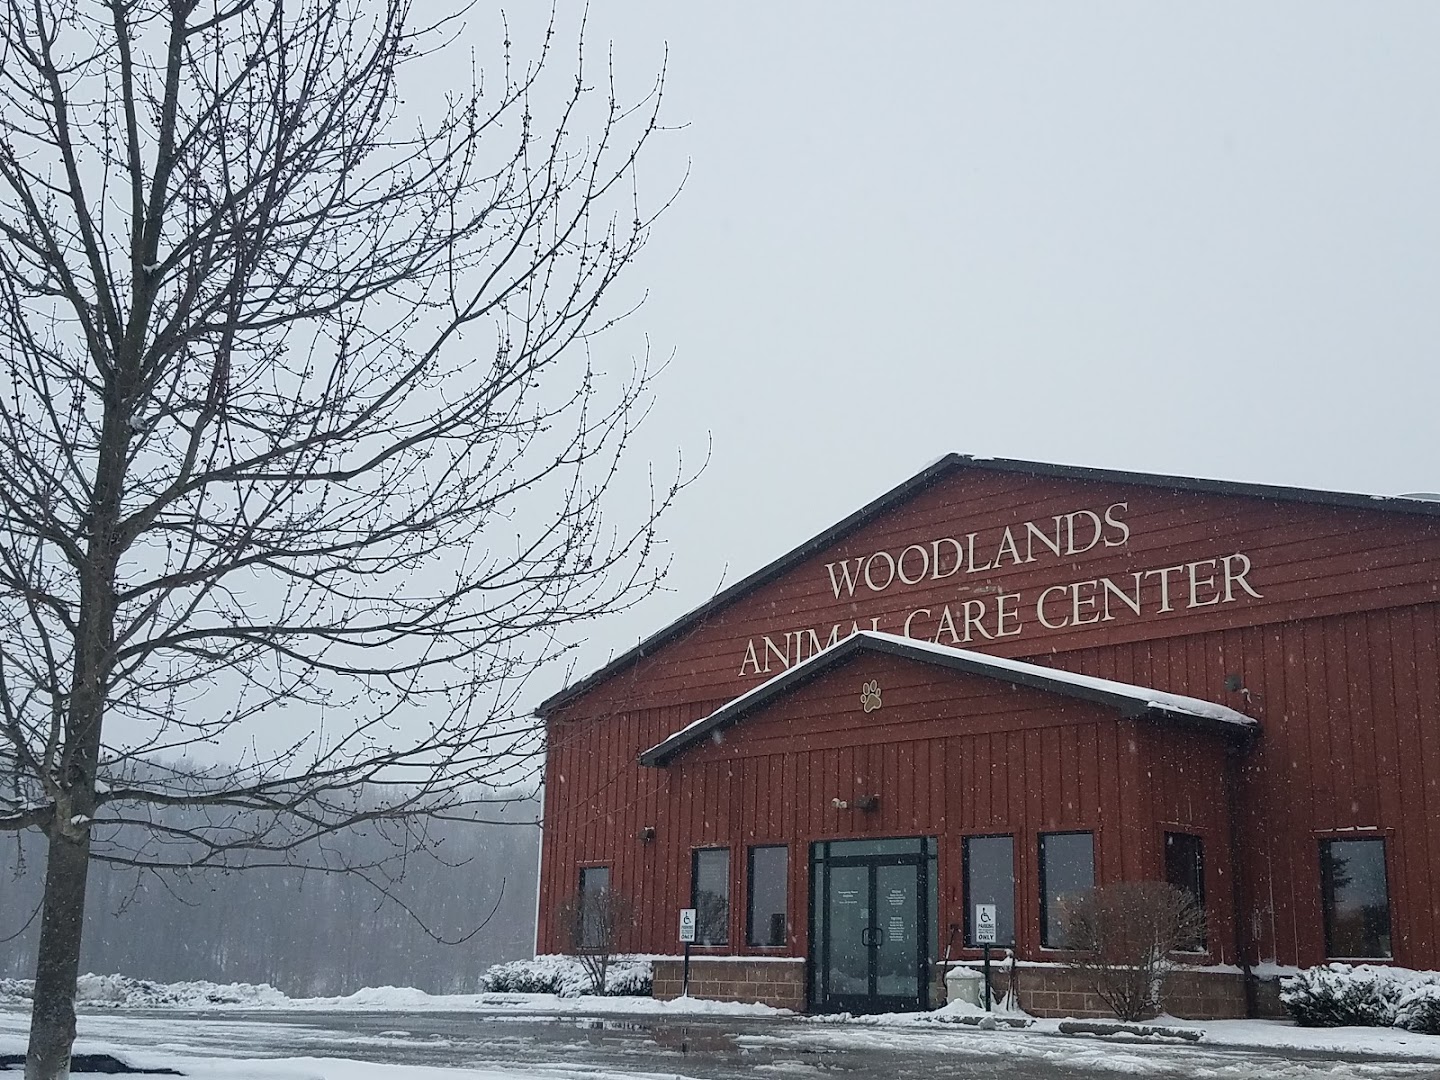 Woodlands Animal Care Center